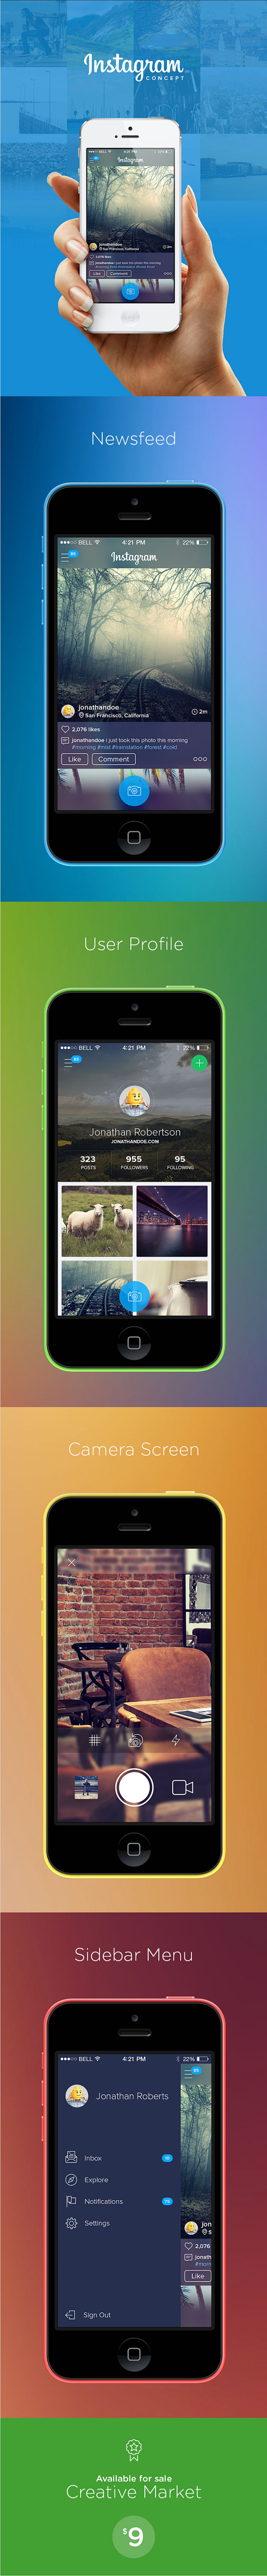 Instagram iOS App Re...